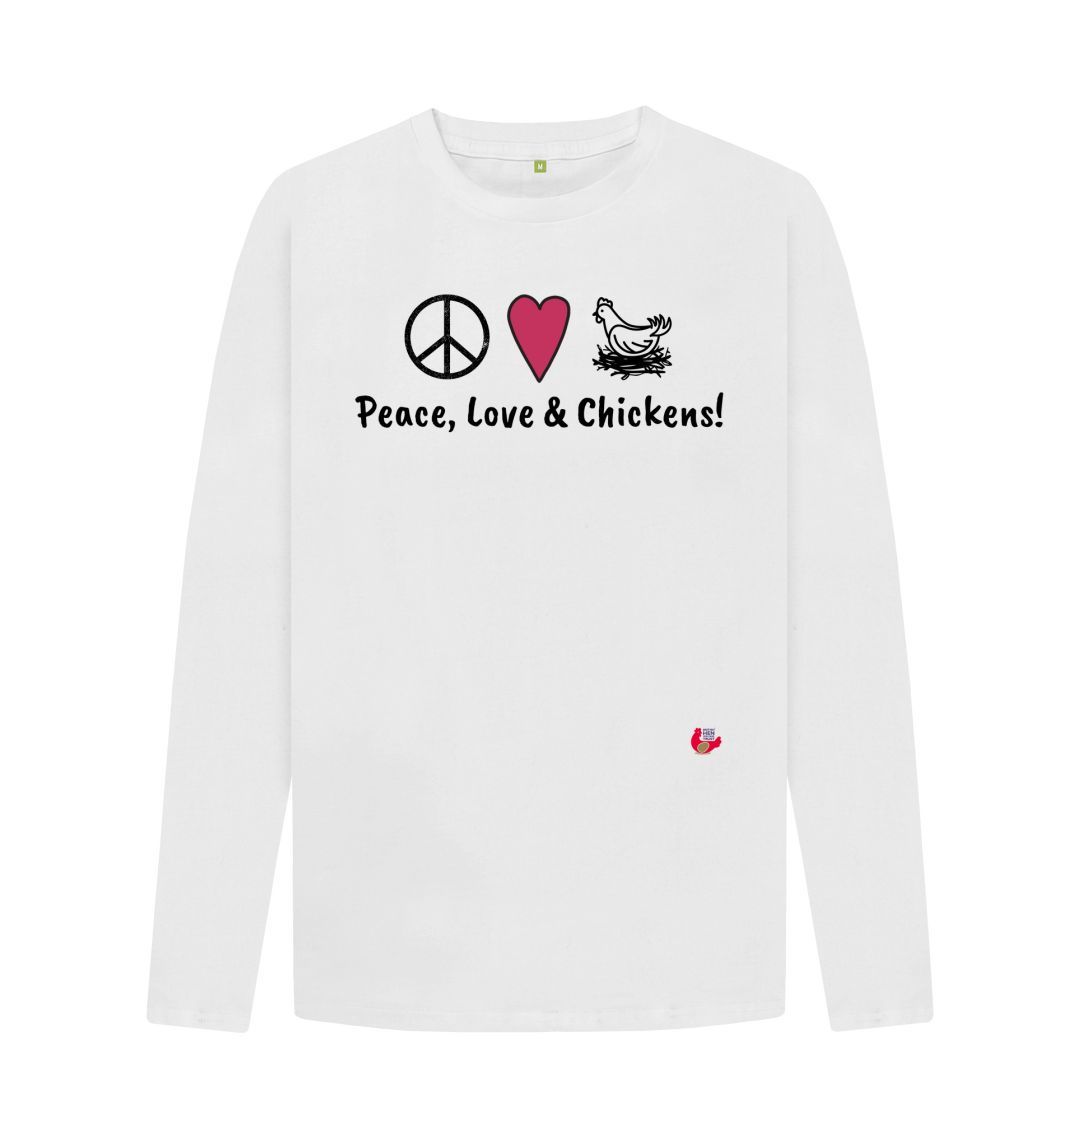 White Men's Long Sleeve T-Shirt - Peace, Love & Chickens - Large Logo